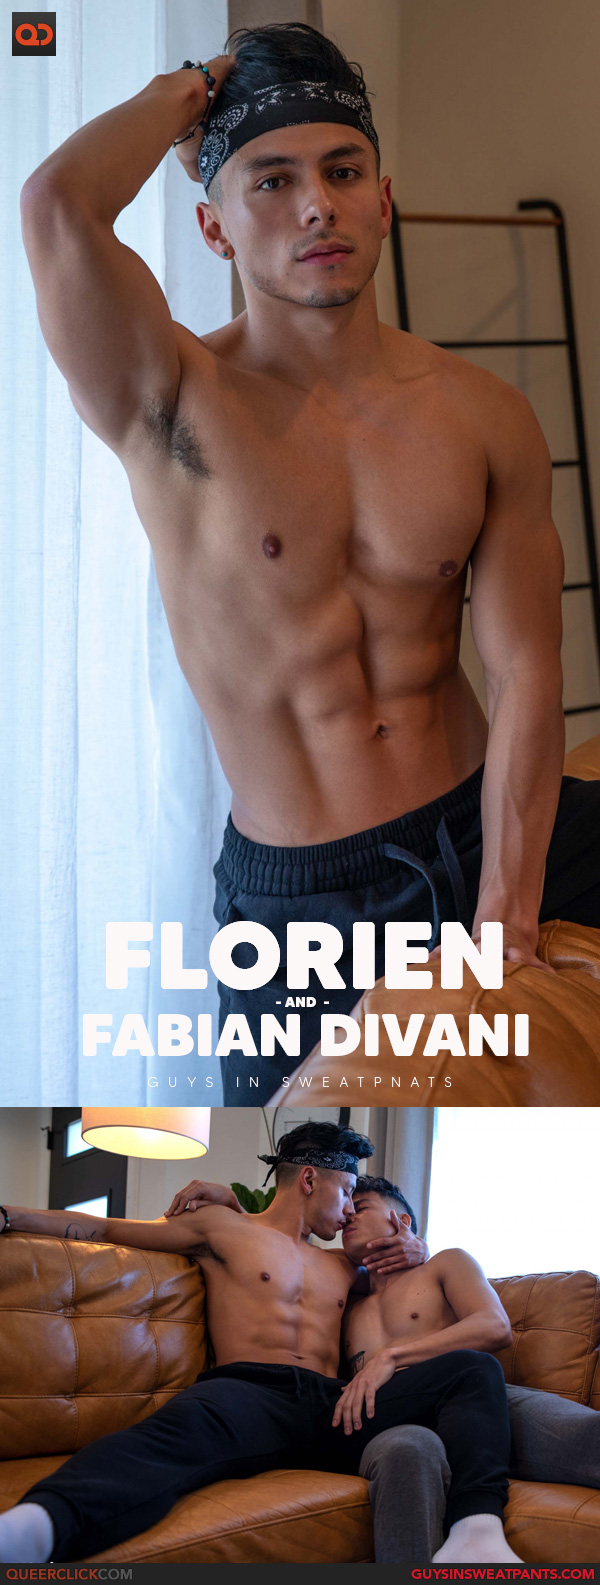 Guys in Sweatpants: Fabian Divani and Florien - HAPPY HOLIDAY SAVINGS!